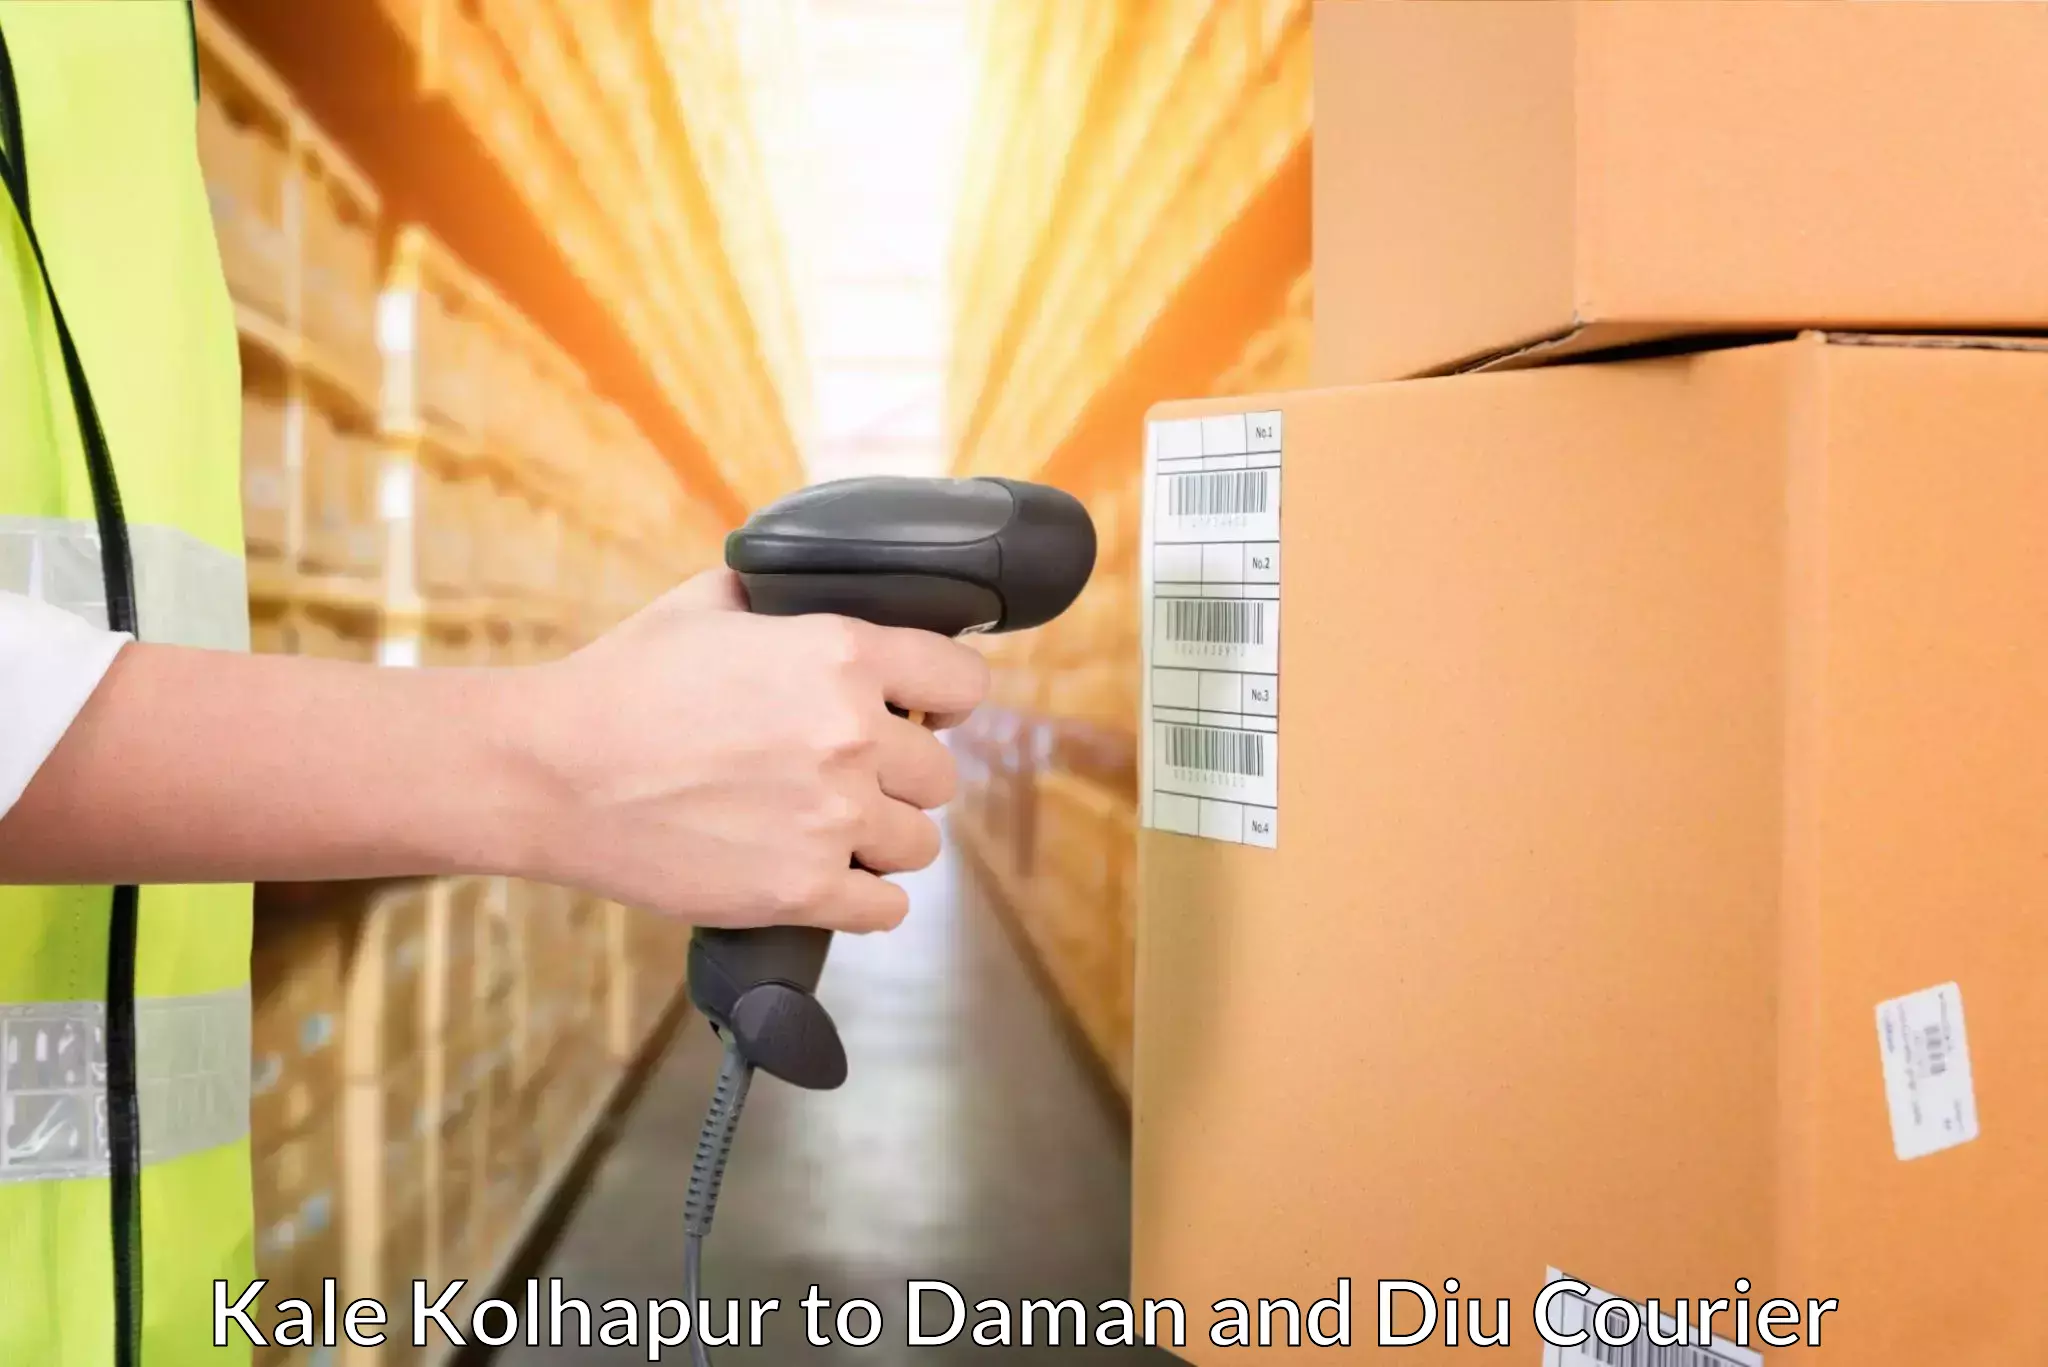 Courier service comparison Kale Kolhapur to Daman and Diu